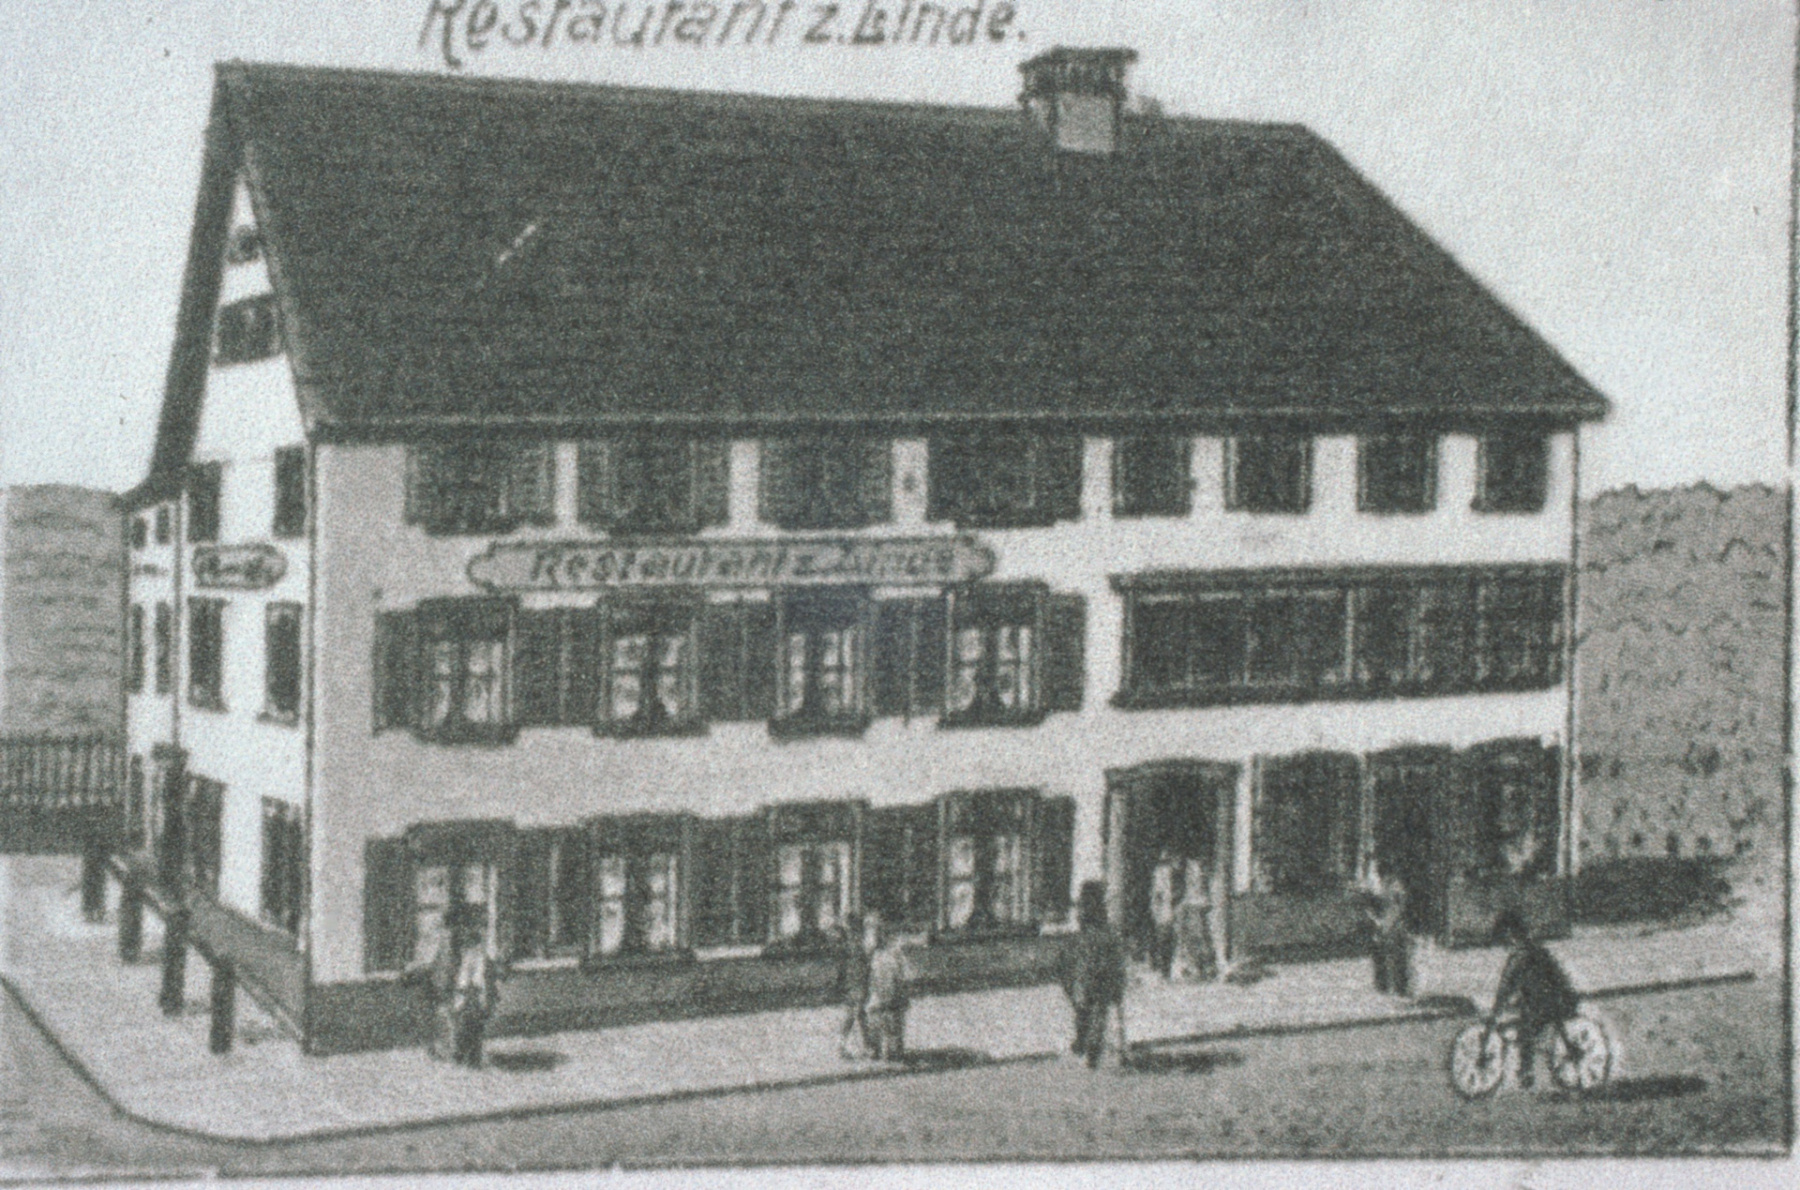 Restaurant Linde, ab Postkarte